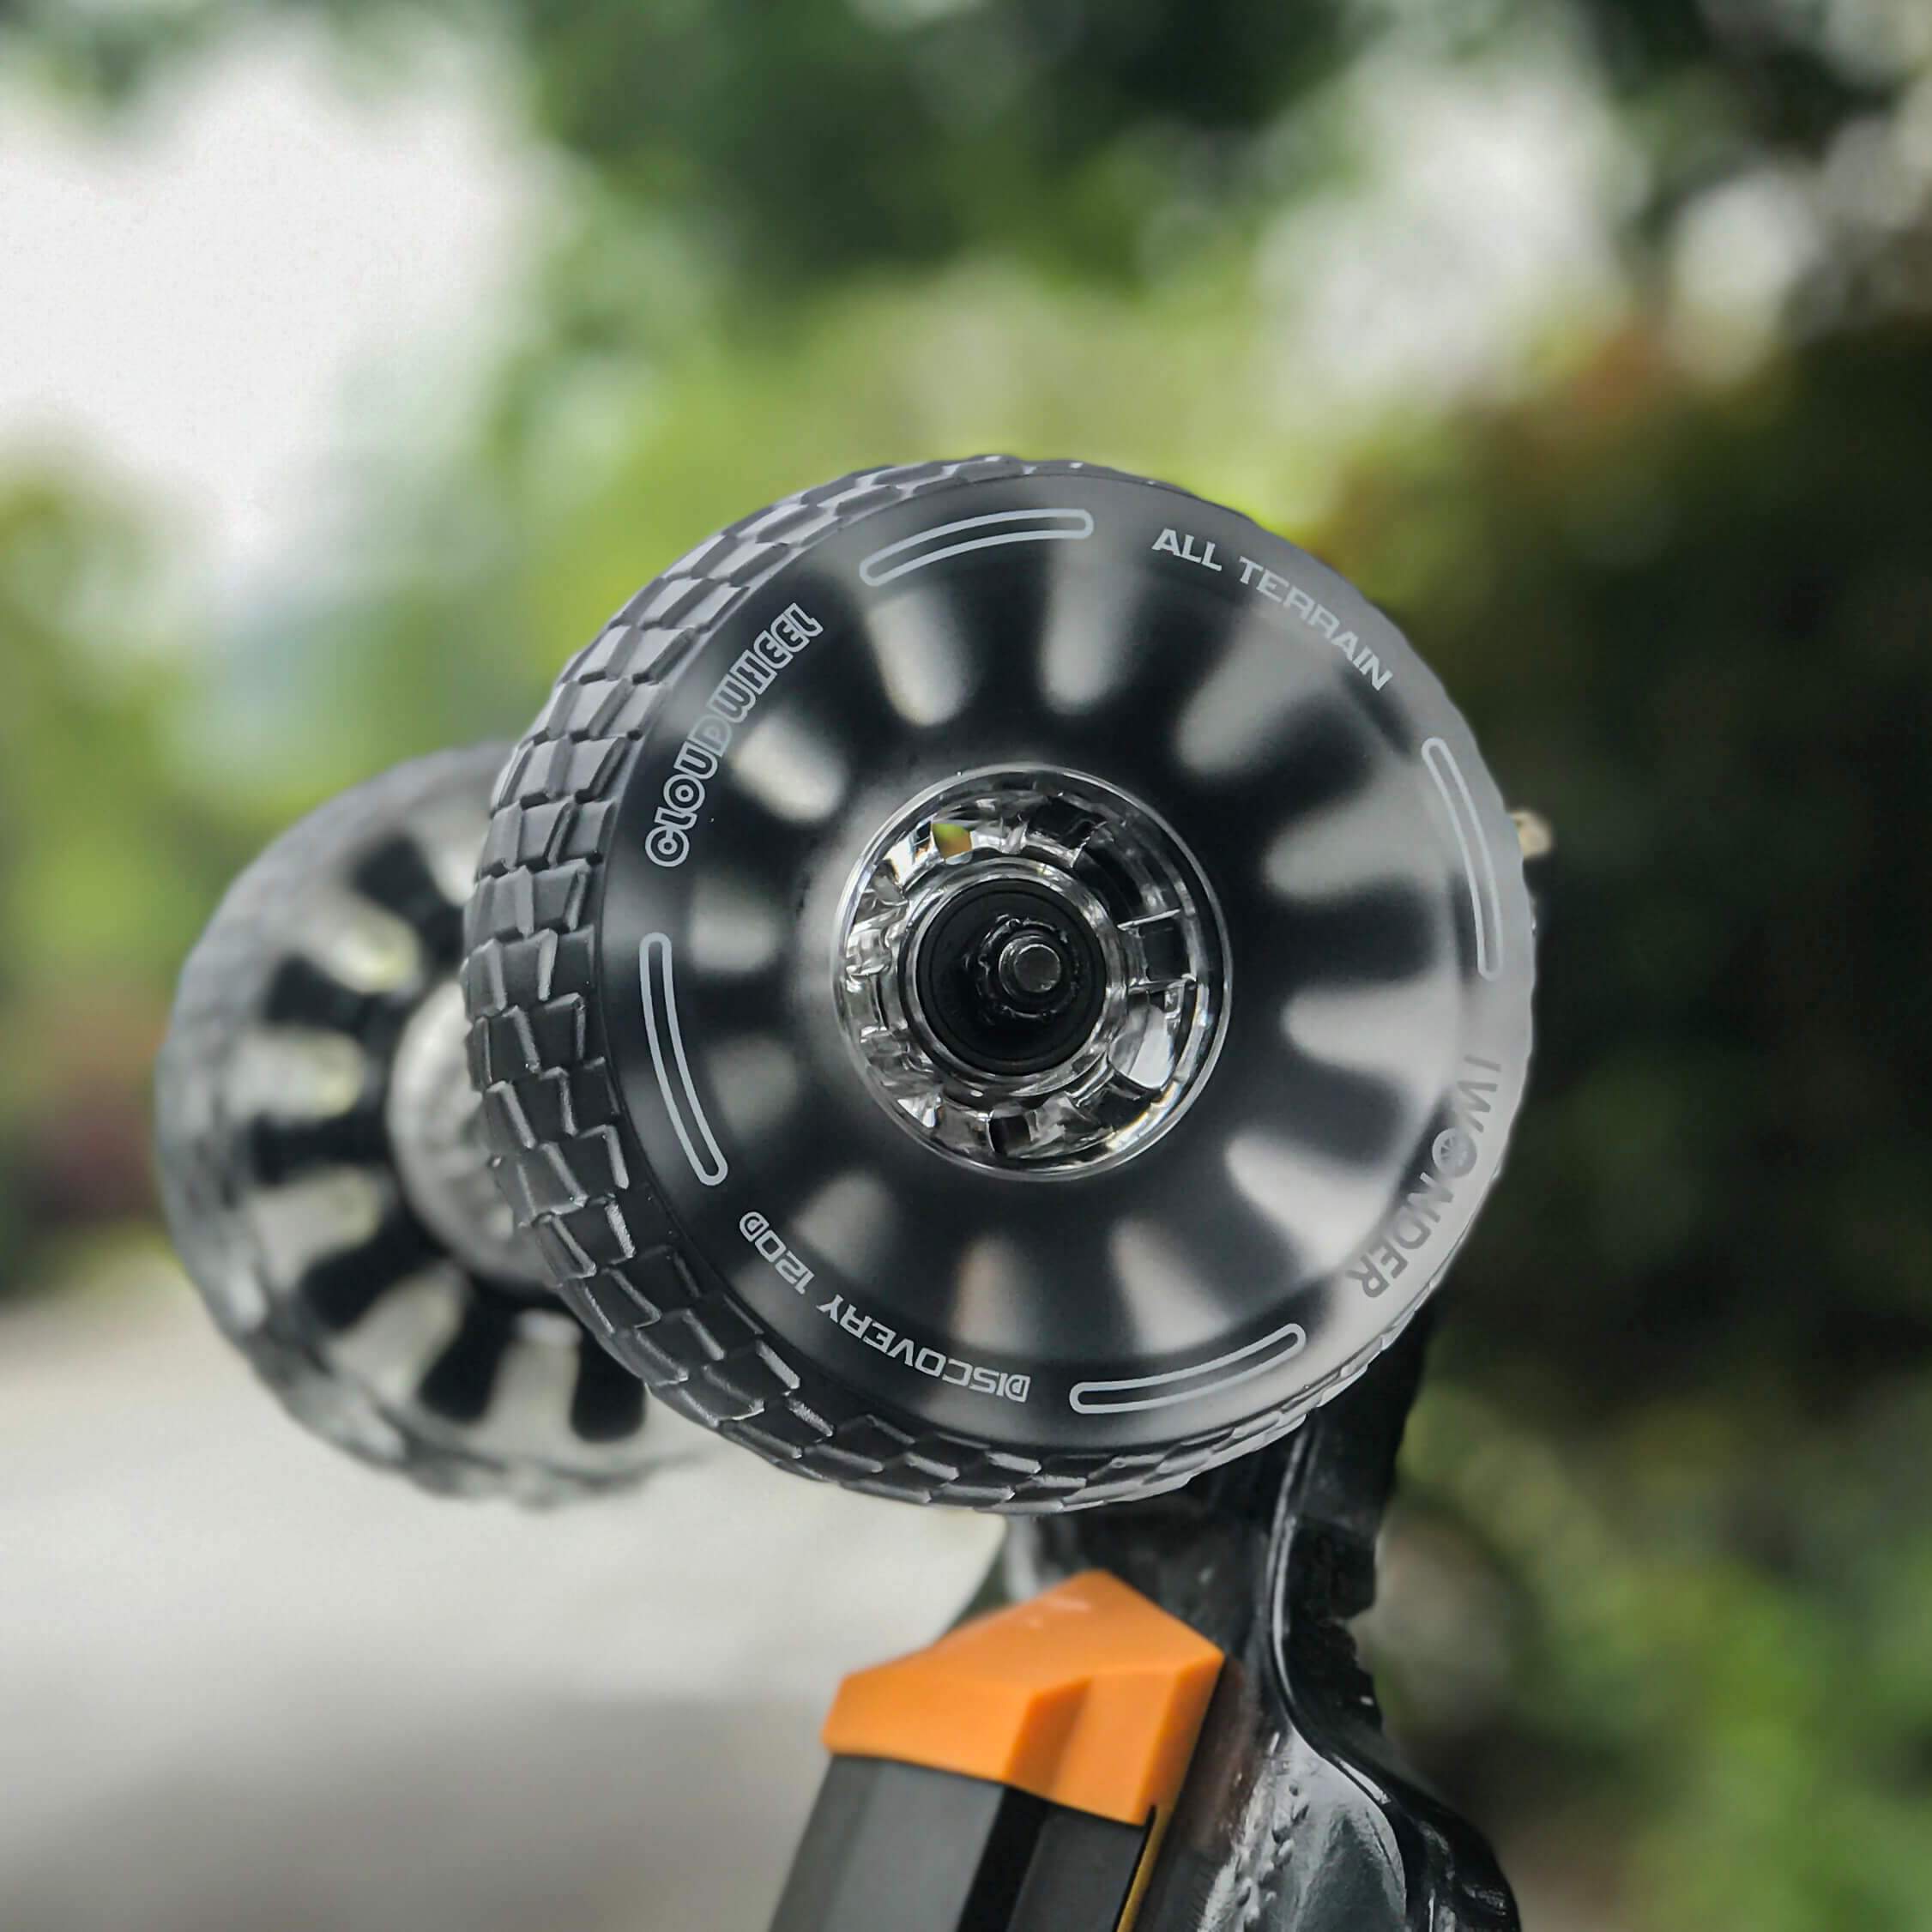 CLOUDWHEEL Discovery 120mm/105mm Urban All Terrain Off Road Electric Skateboard Wheels For Exway Boards Wheel Pulley Kit